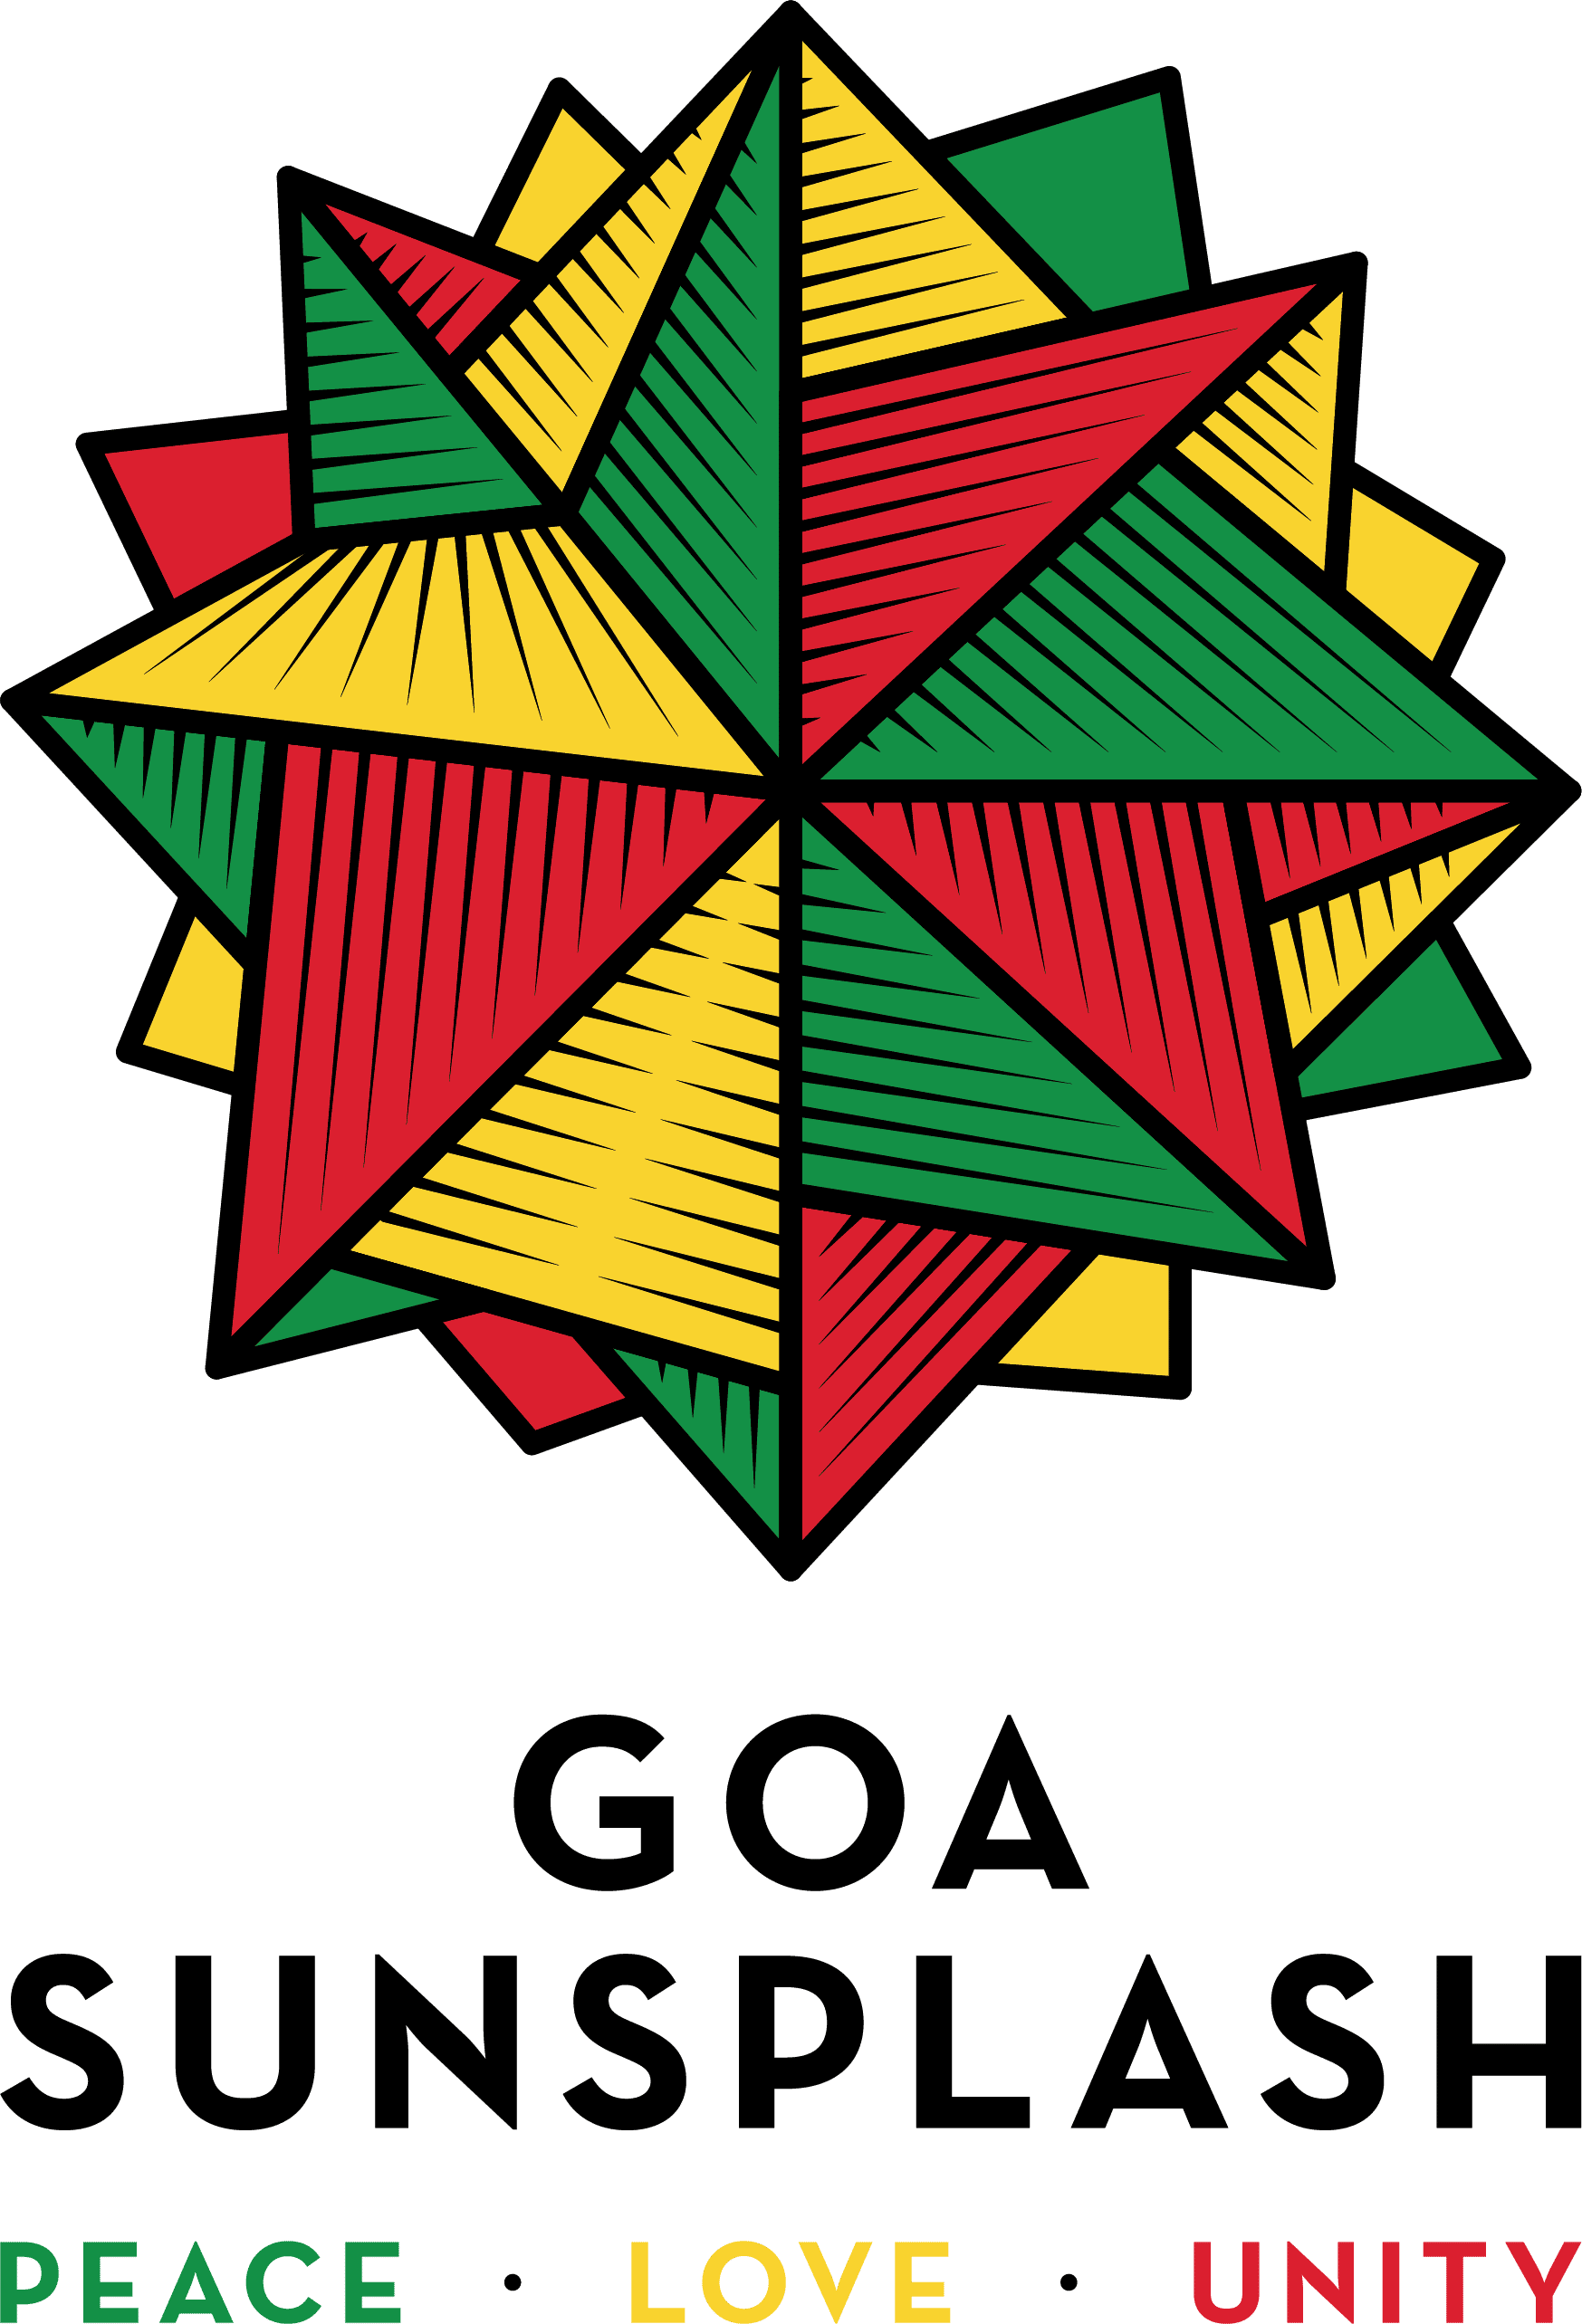 Goa Sunsplash logo. Photo: Goa Sunsplash